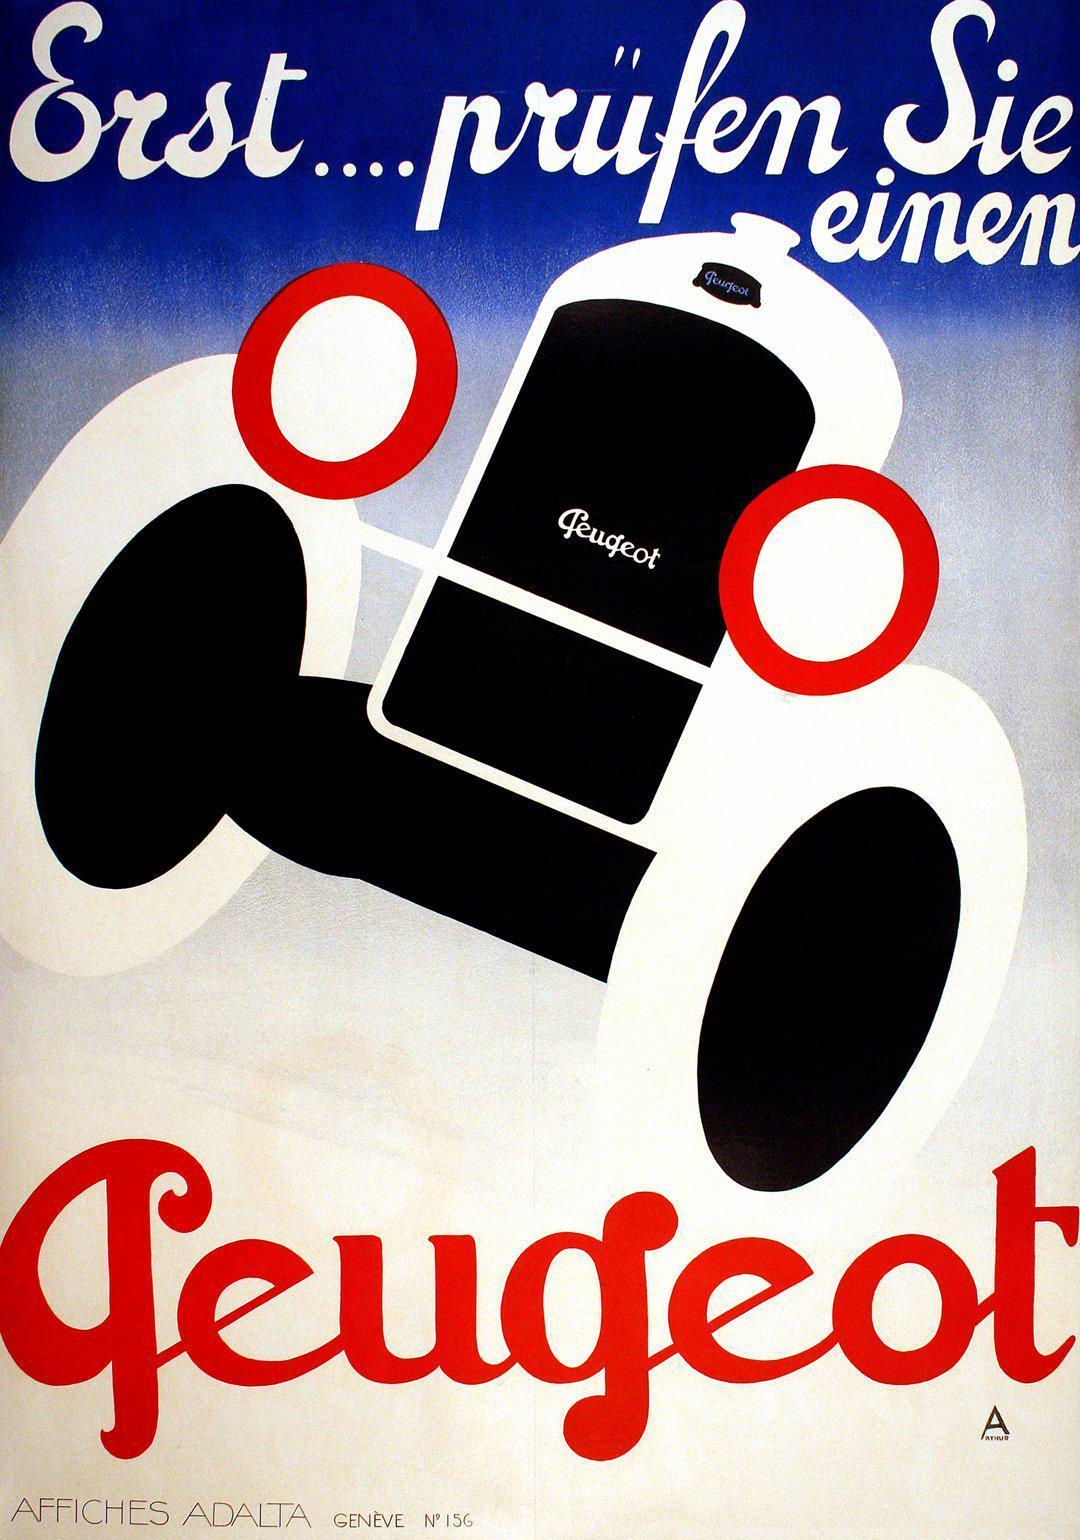 Peugeot by Ernst Art Deco Poster c1930 Original